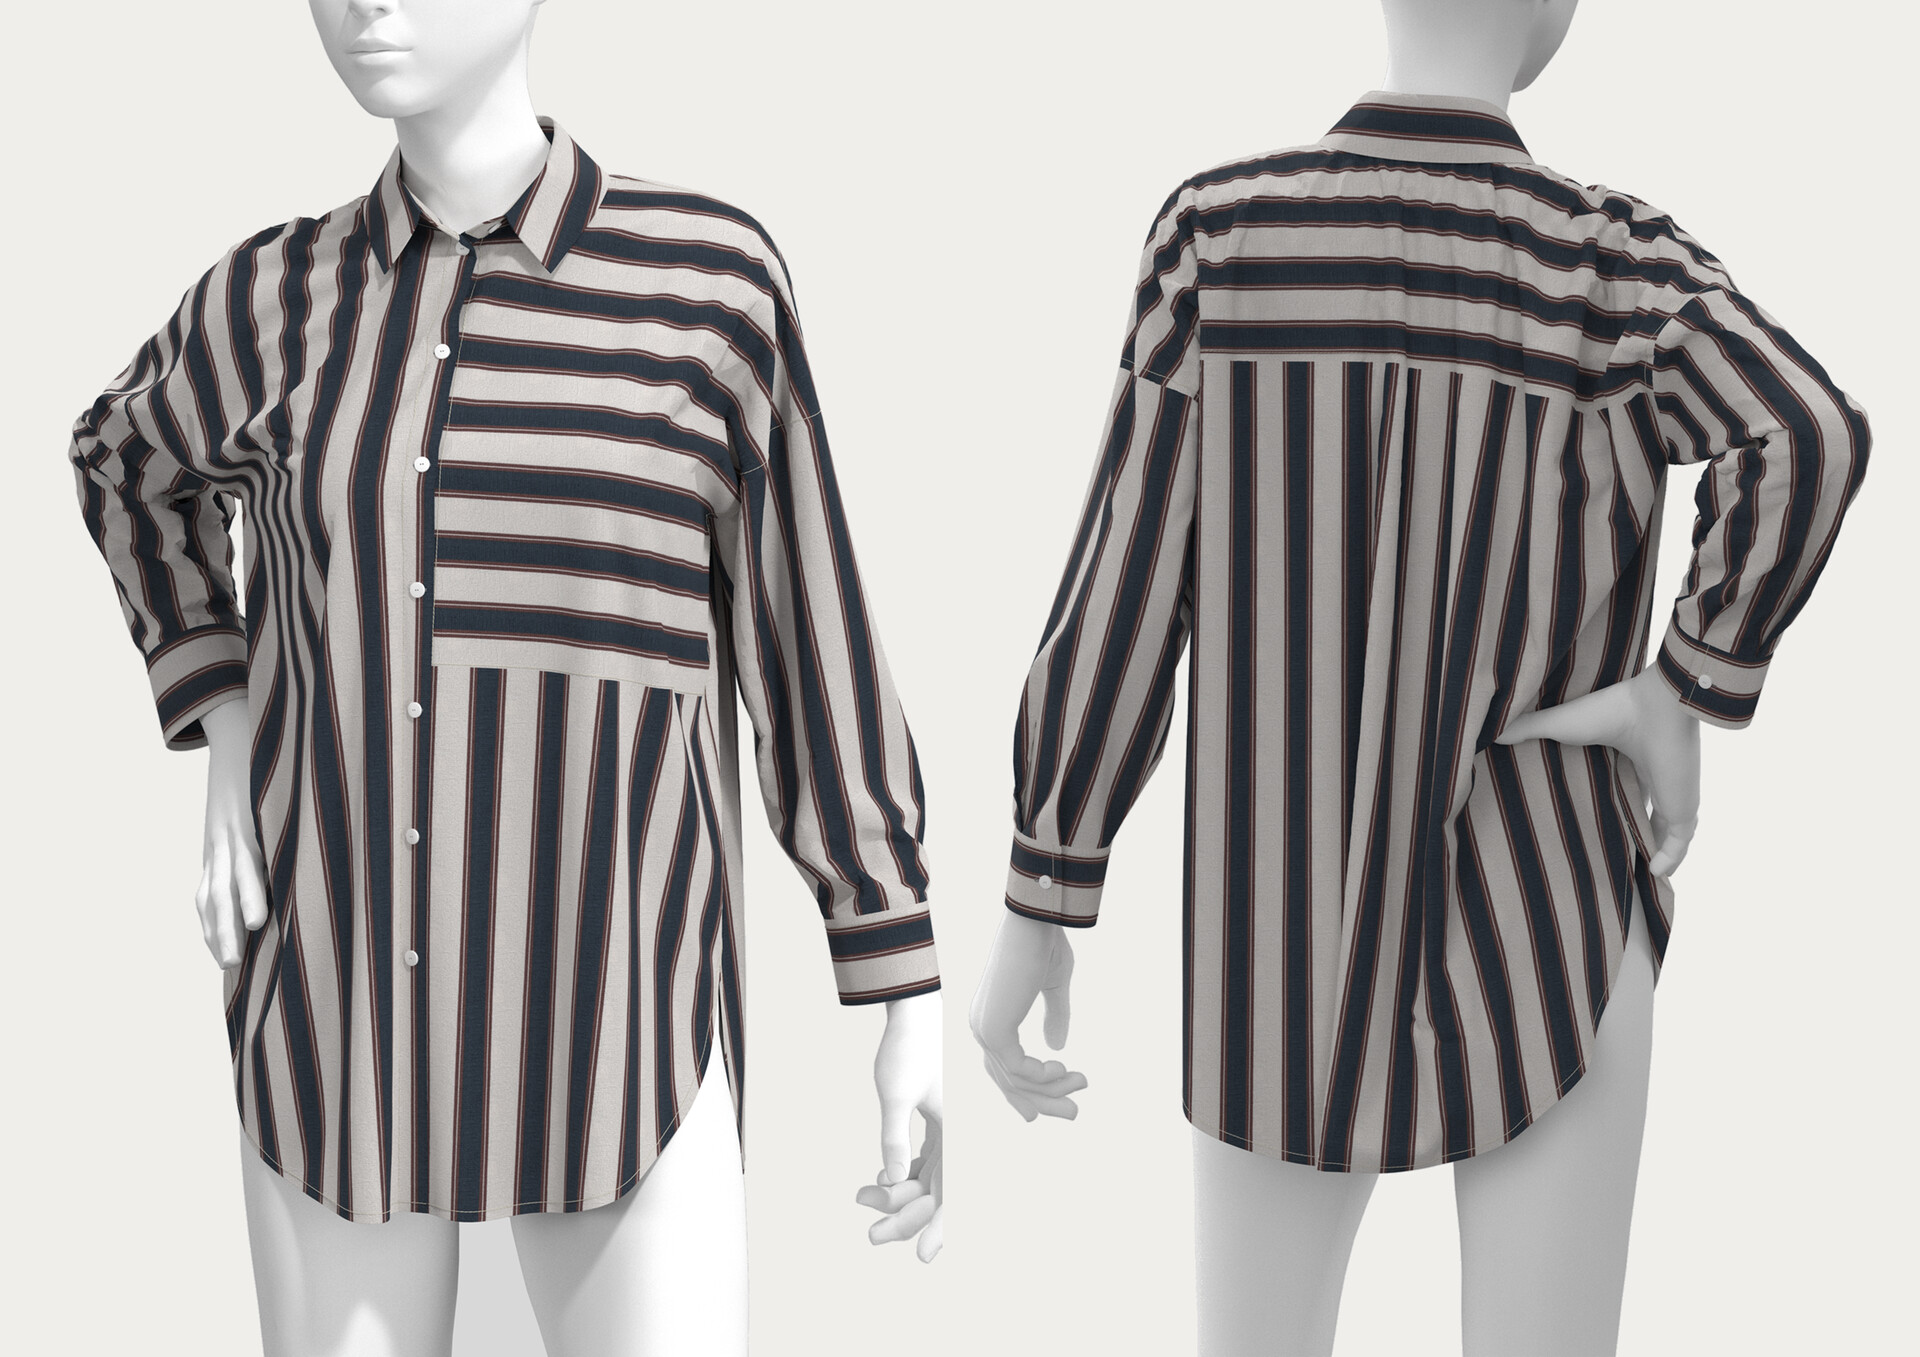 ArtStation - 3d striped blouse, Madlen Alex